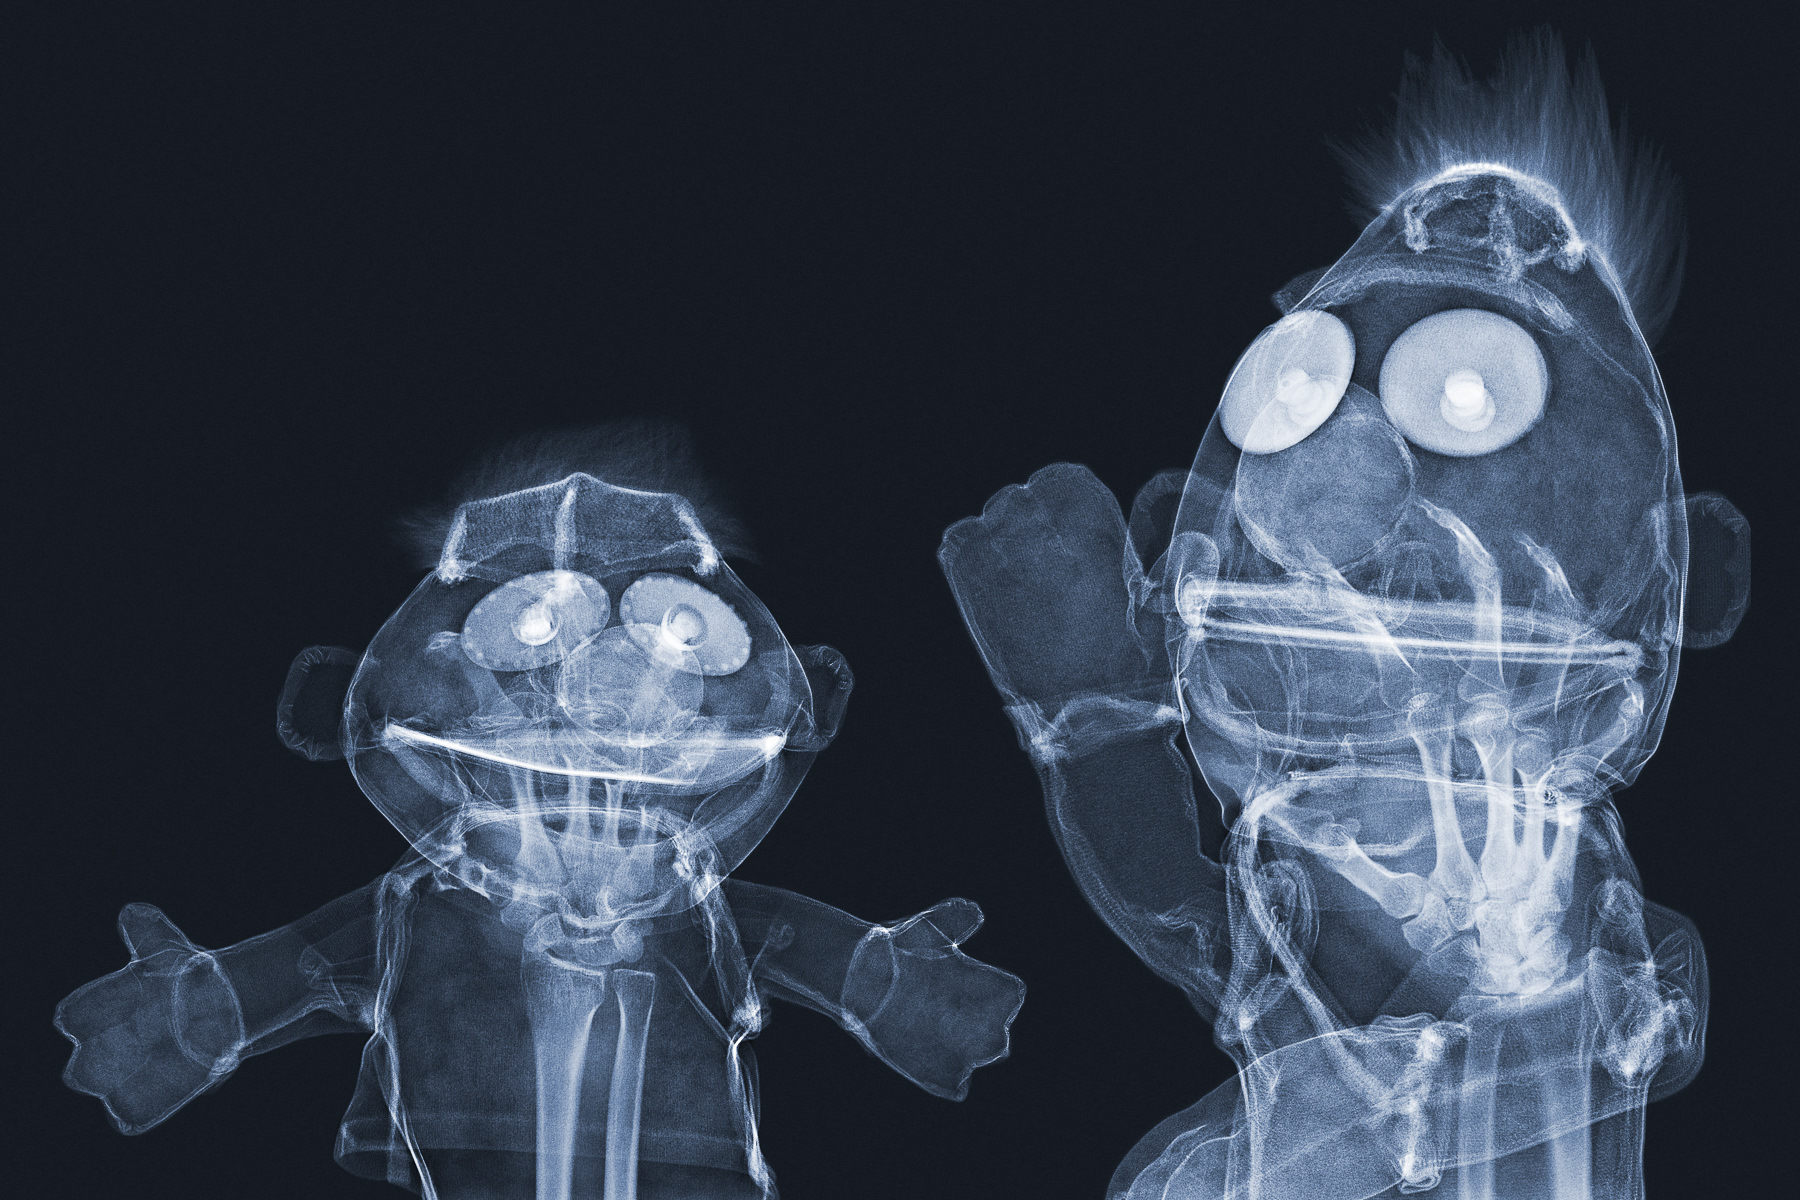 X-ray of Sesame Street Puppets – Bert & Ernie, print by Brendan Fitzpatrick